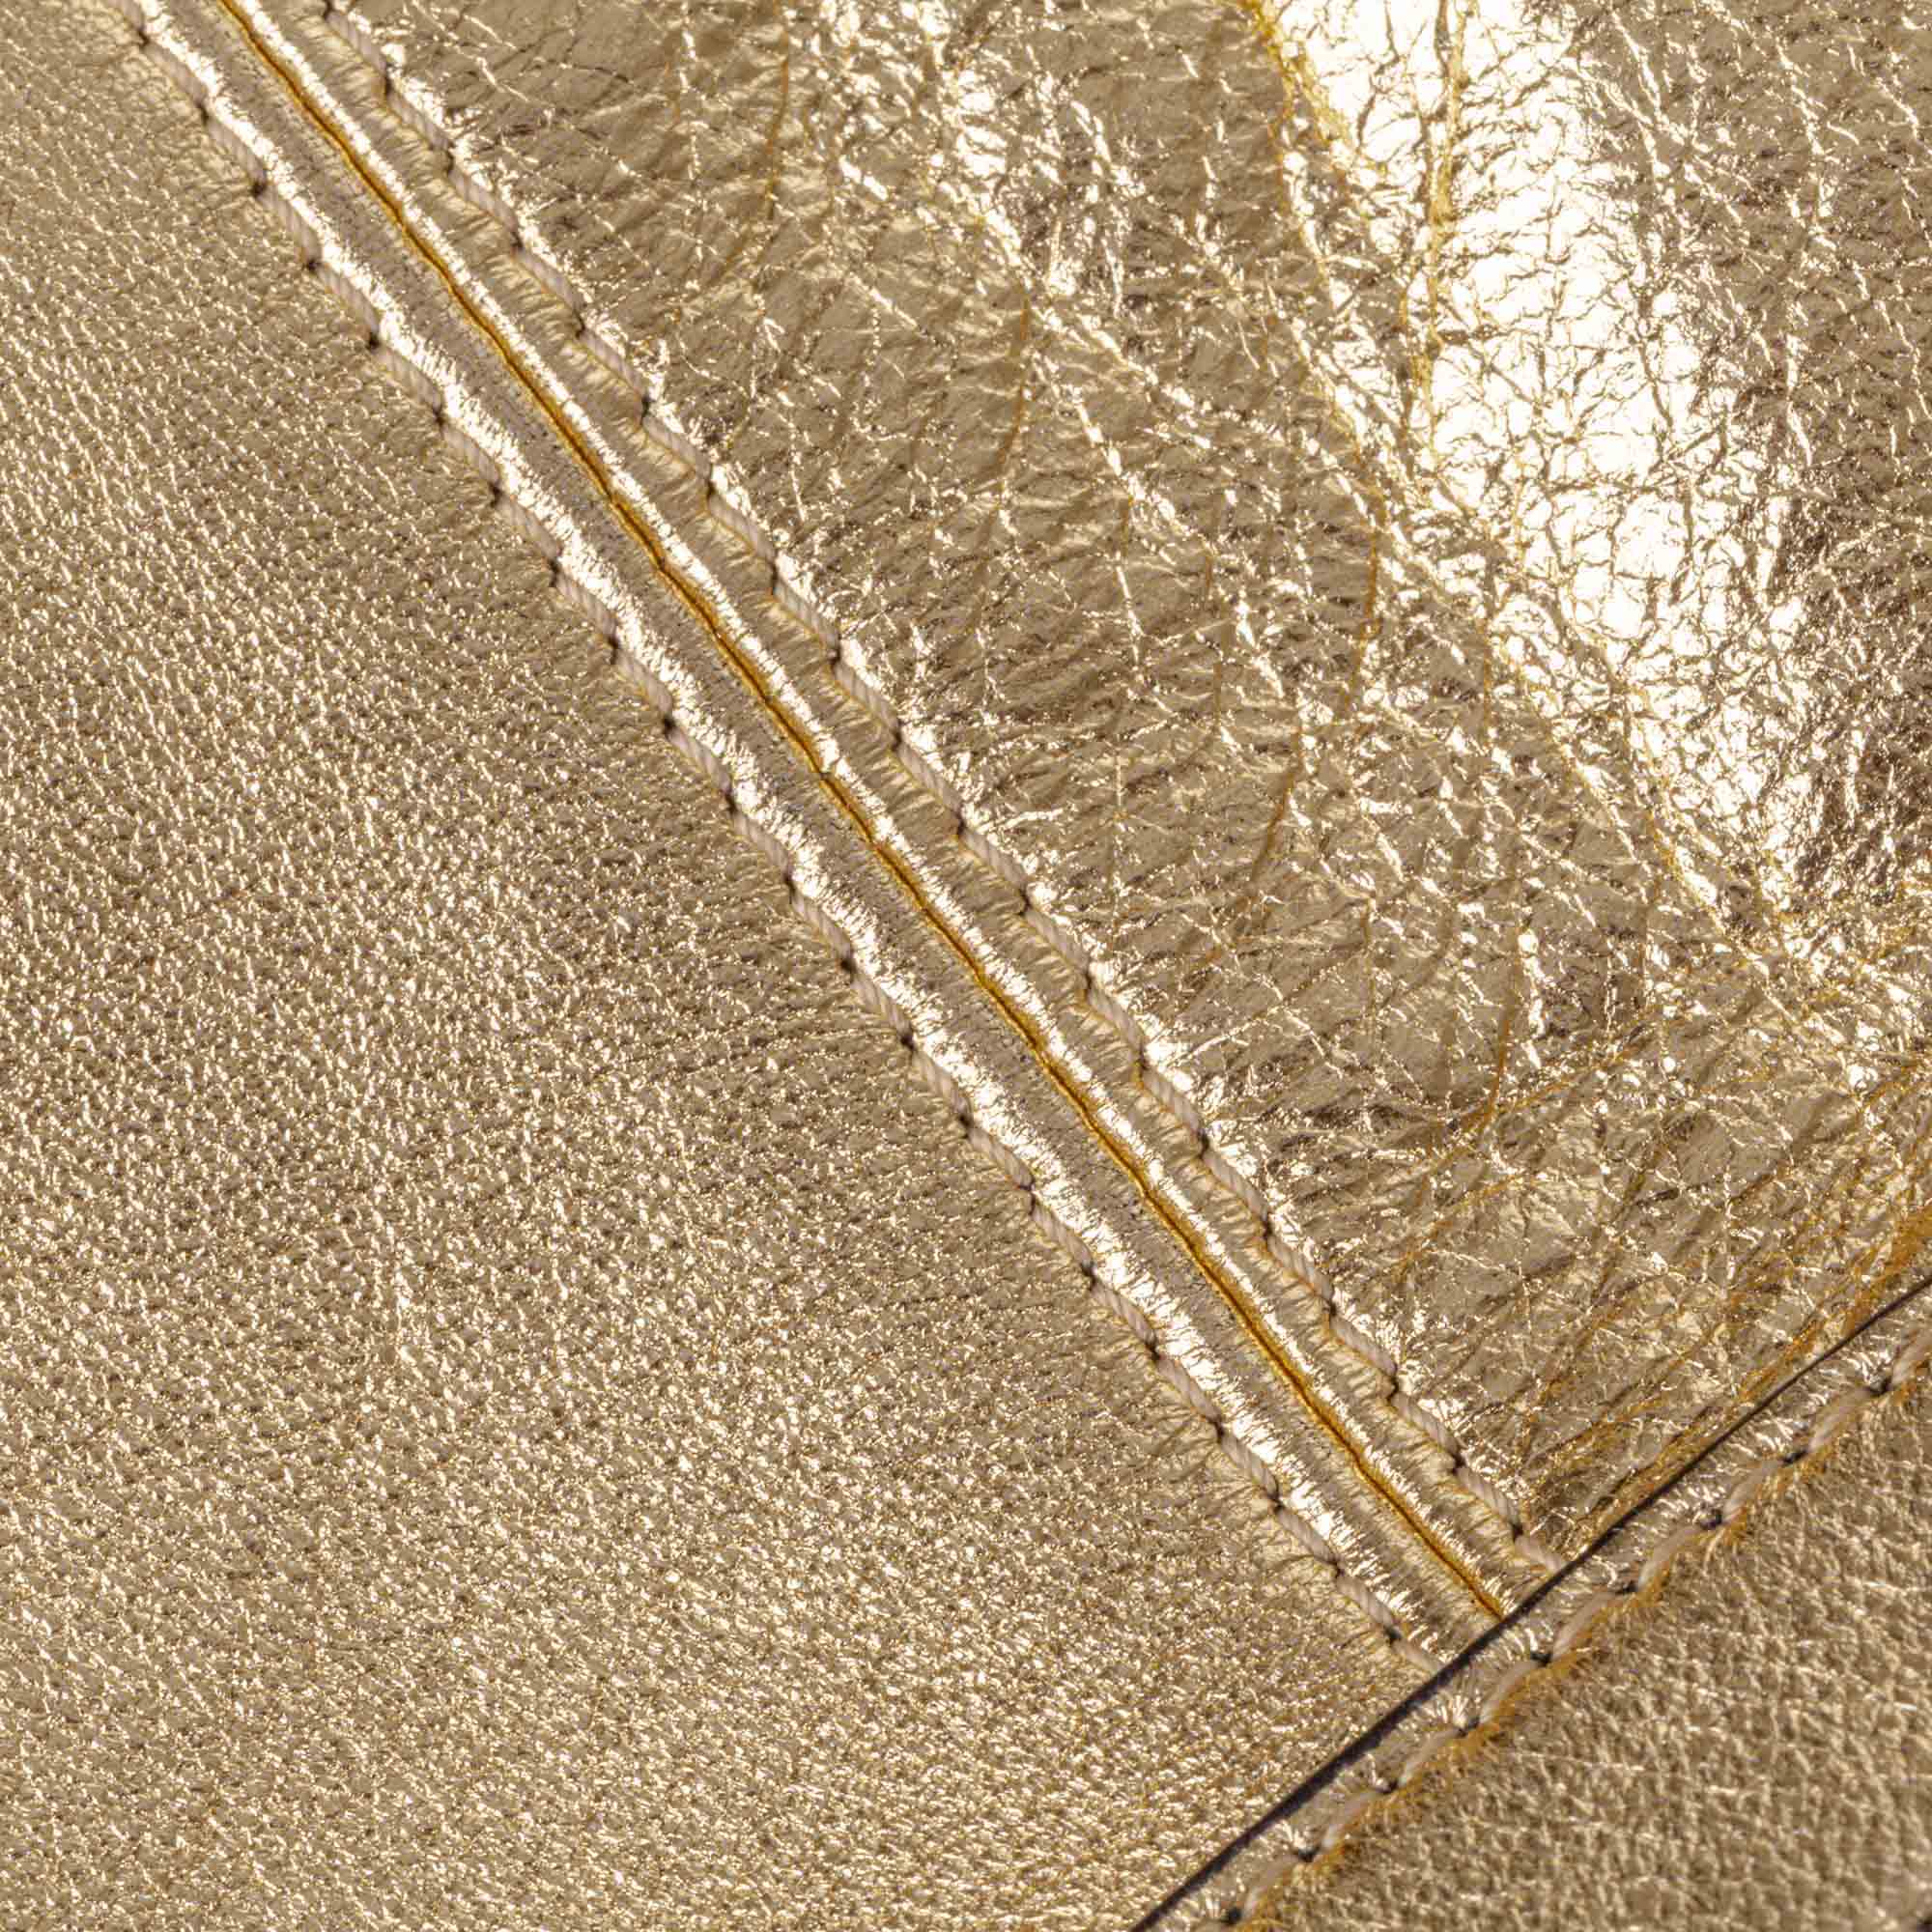 Buy & Consign Authentic Alexander Mcqueen CalfSkin De Manta Clutch Bag Gold at The Plush Posh